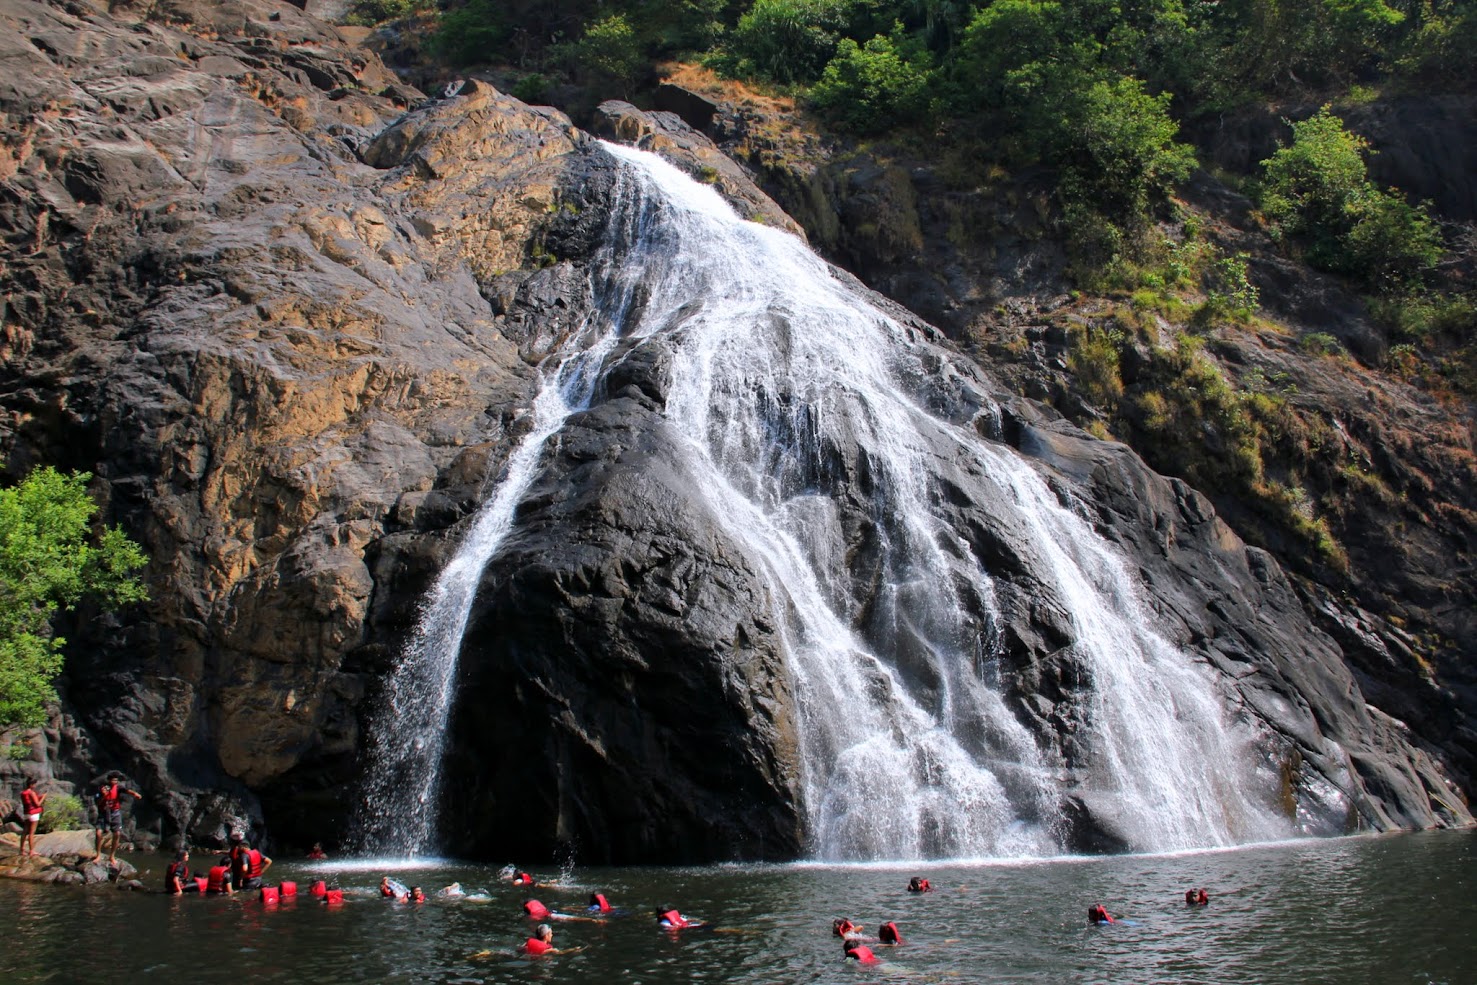 Экскурсия на водопад дудхсагар в гоа, индия